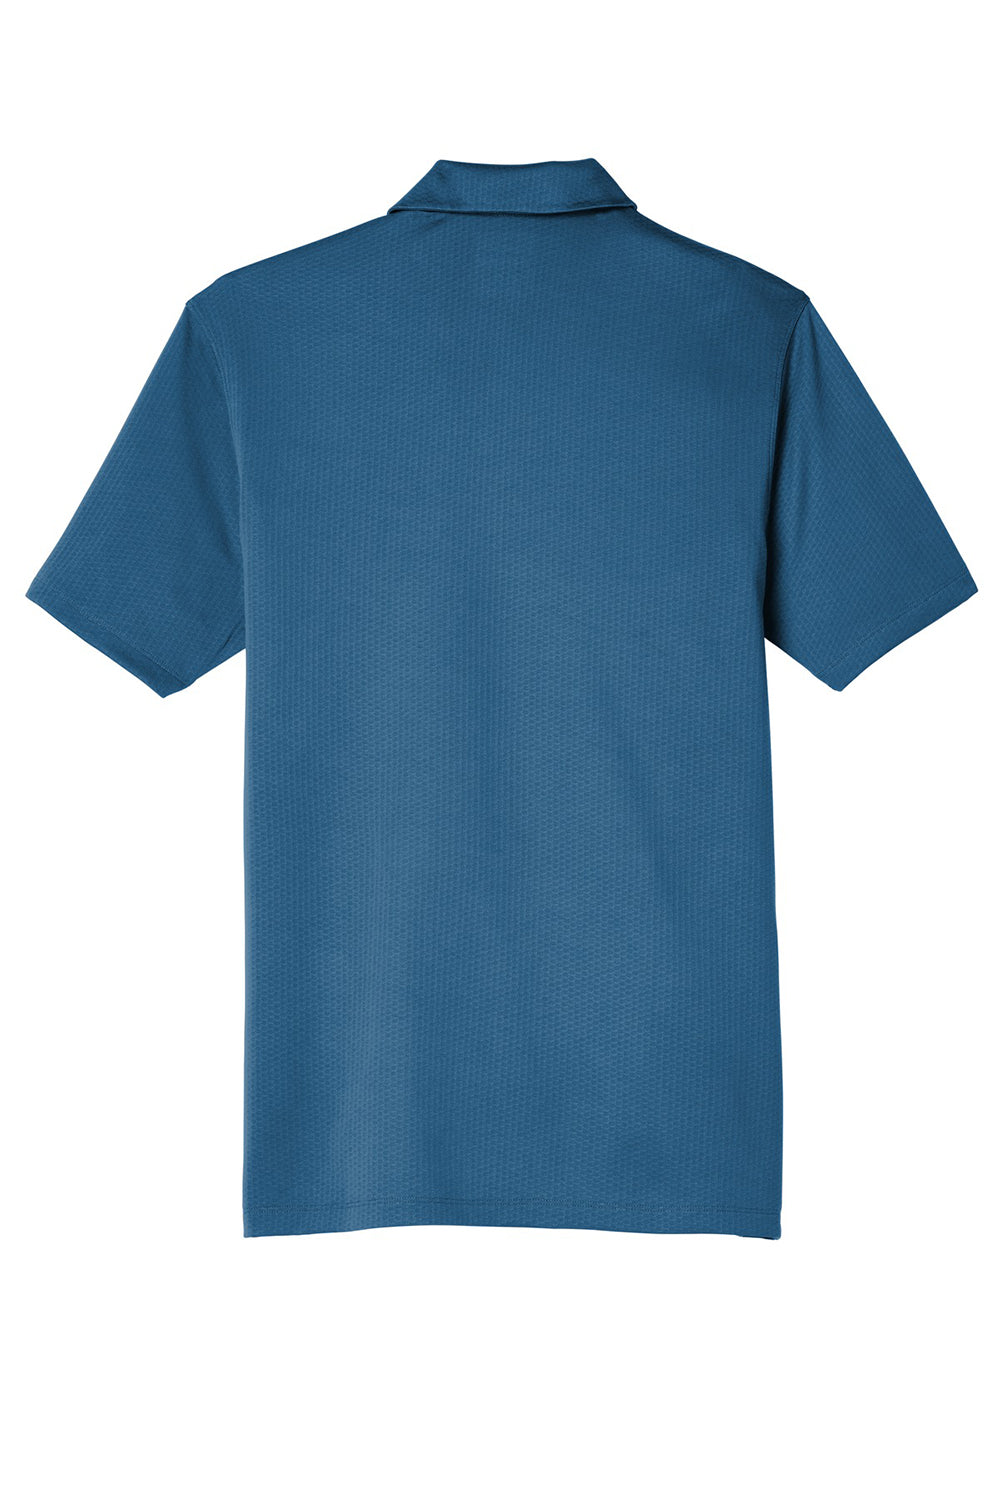 Nike NKAH6266 Mens Dri-Fit Moisture Wicking Short Sleeve Polo Shirt Court Blue Flat Back